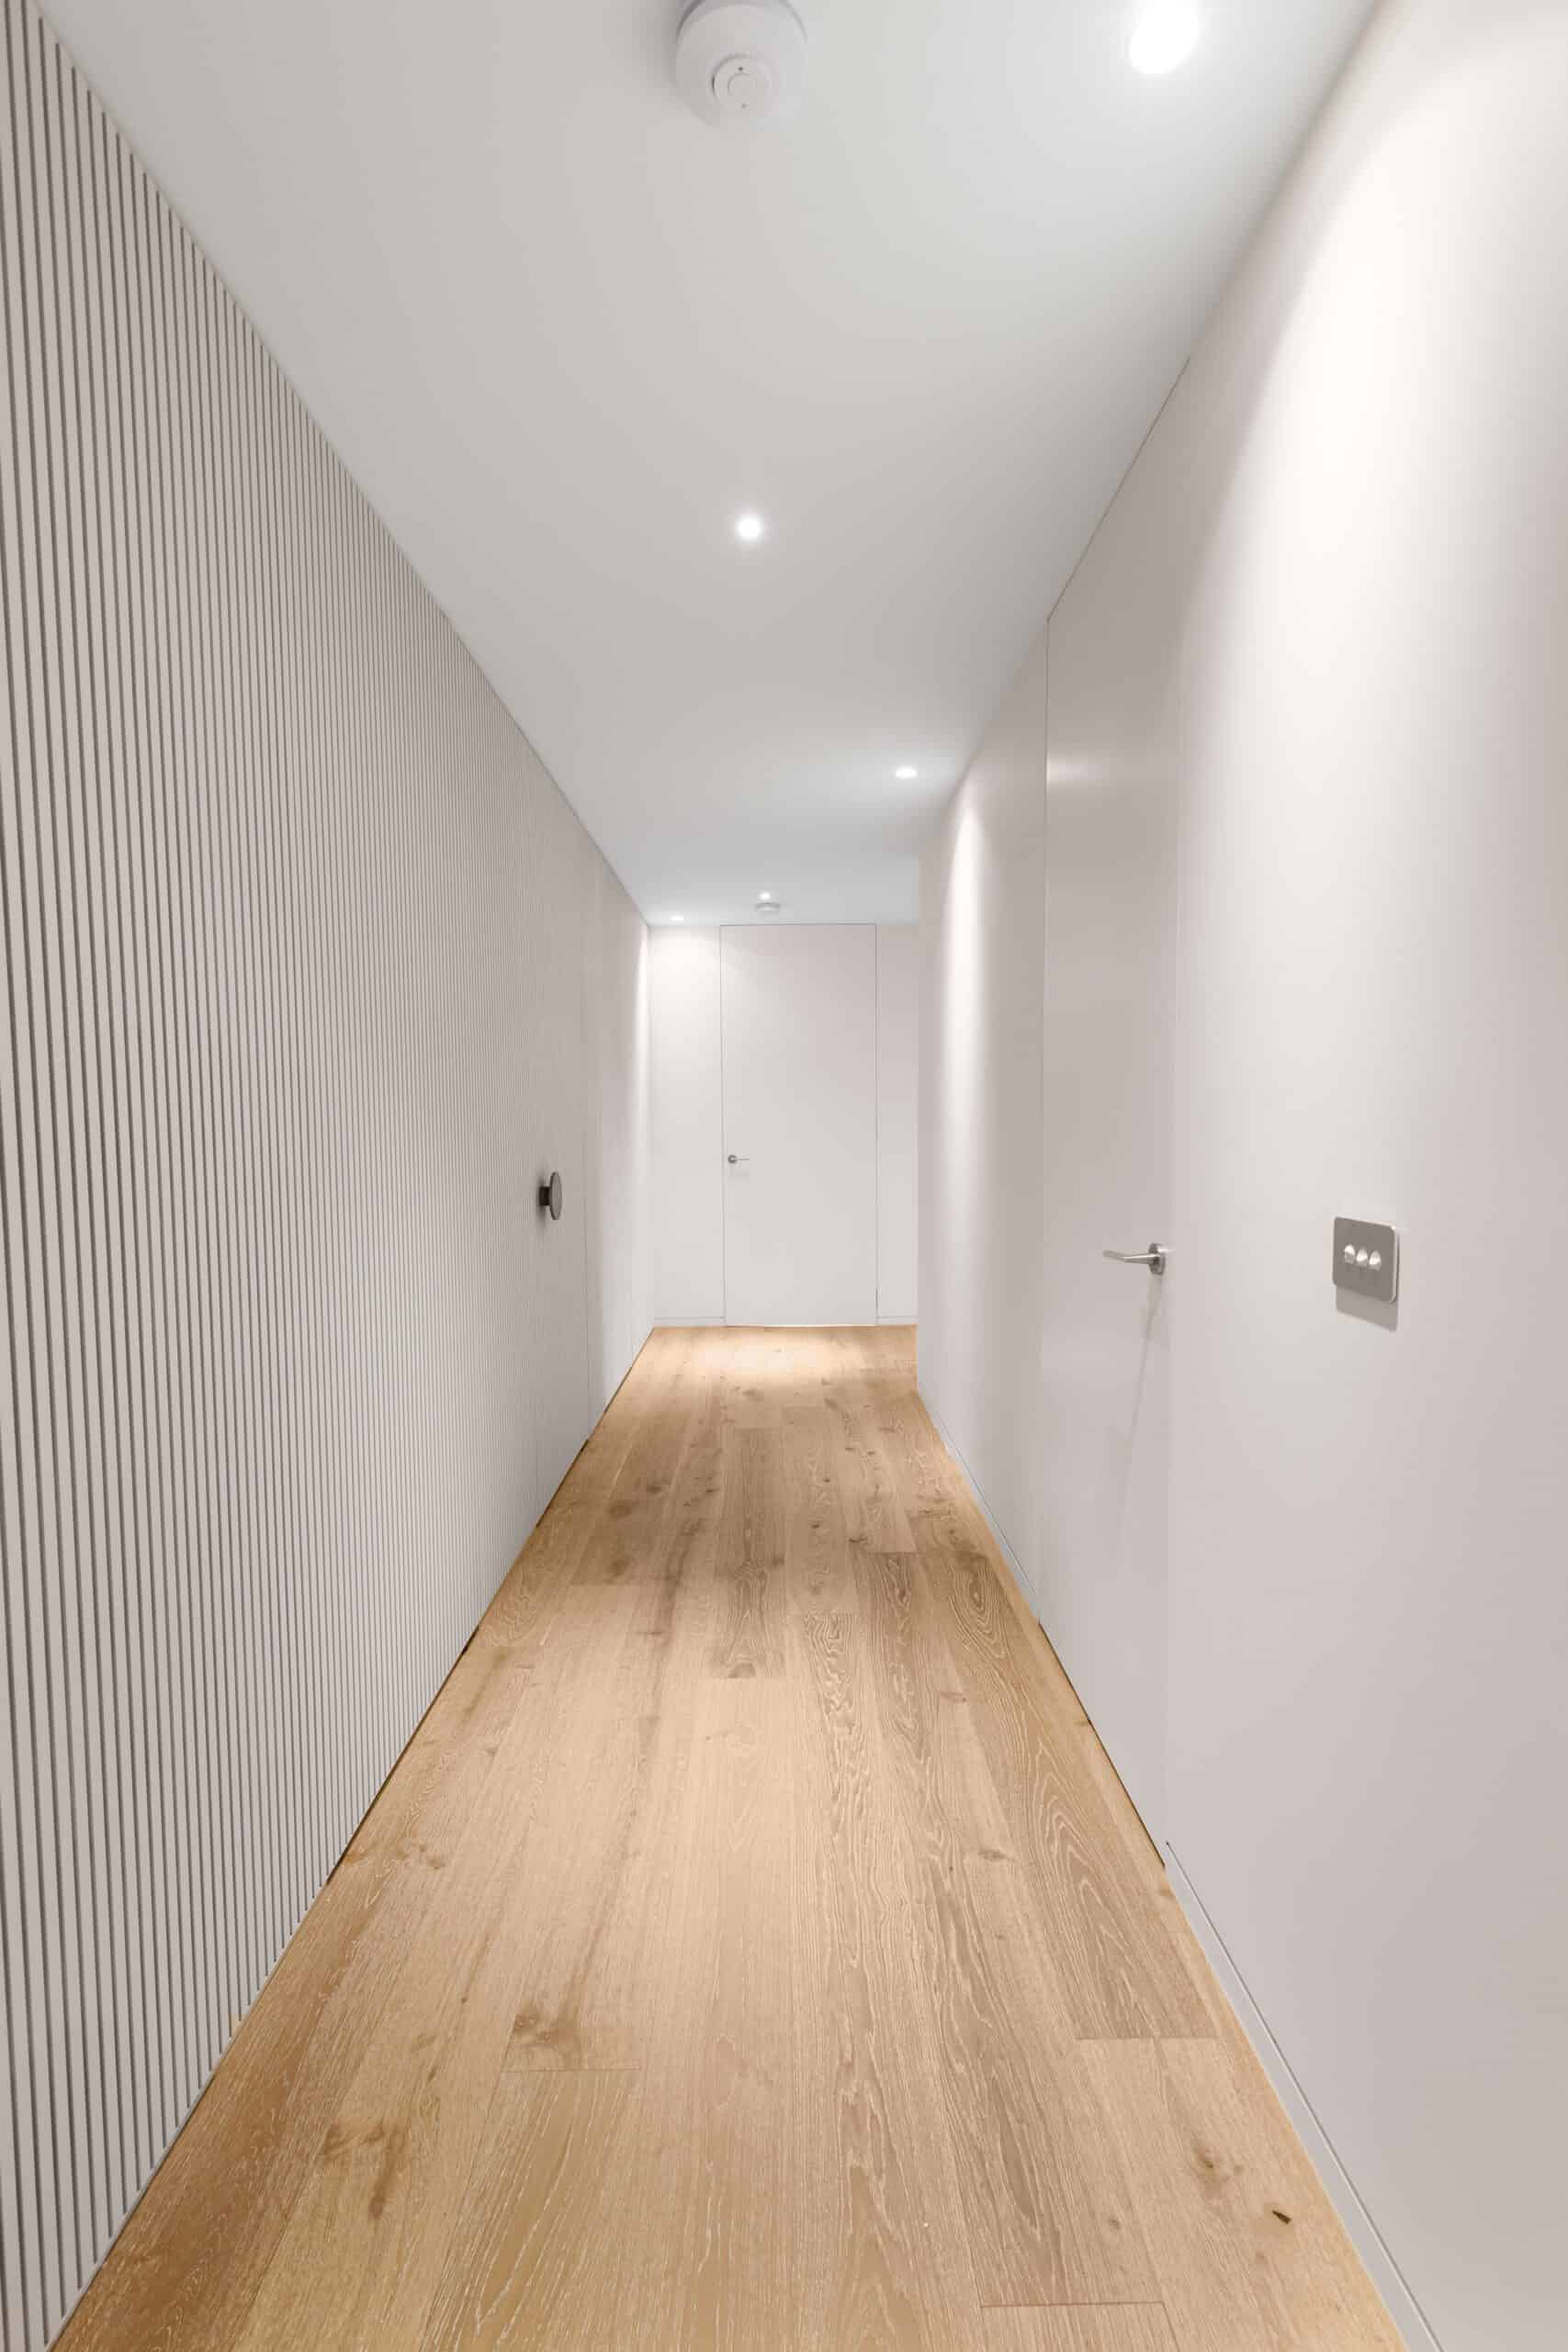 Elegant hallway designed by leading home builders.